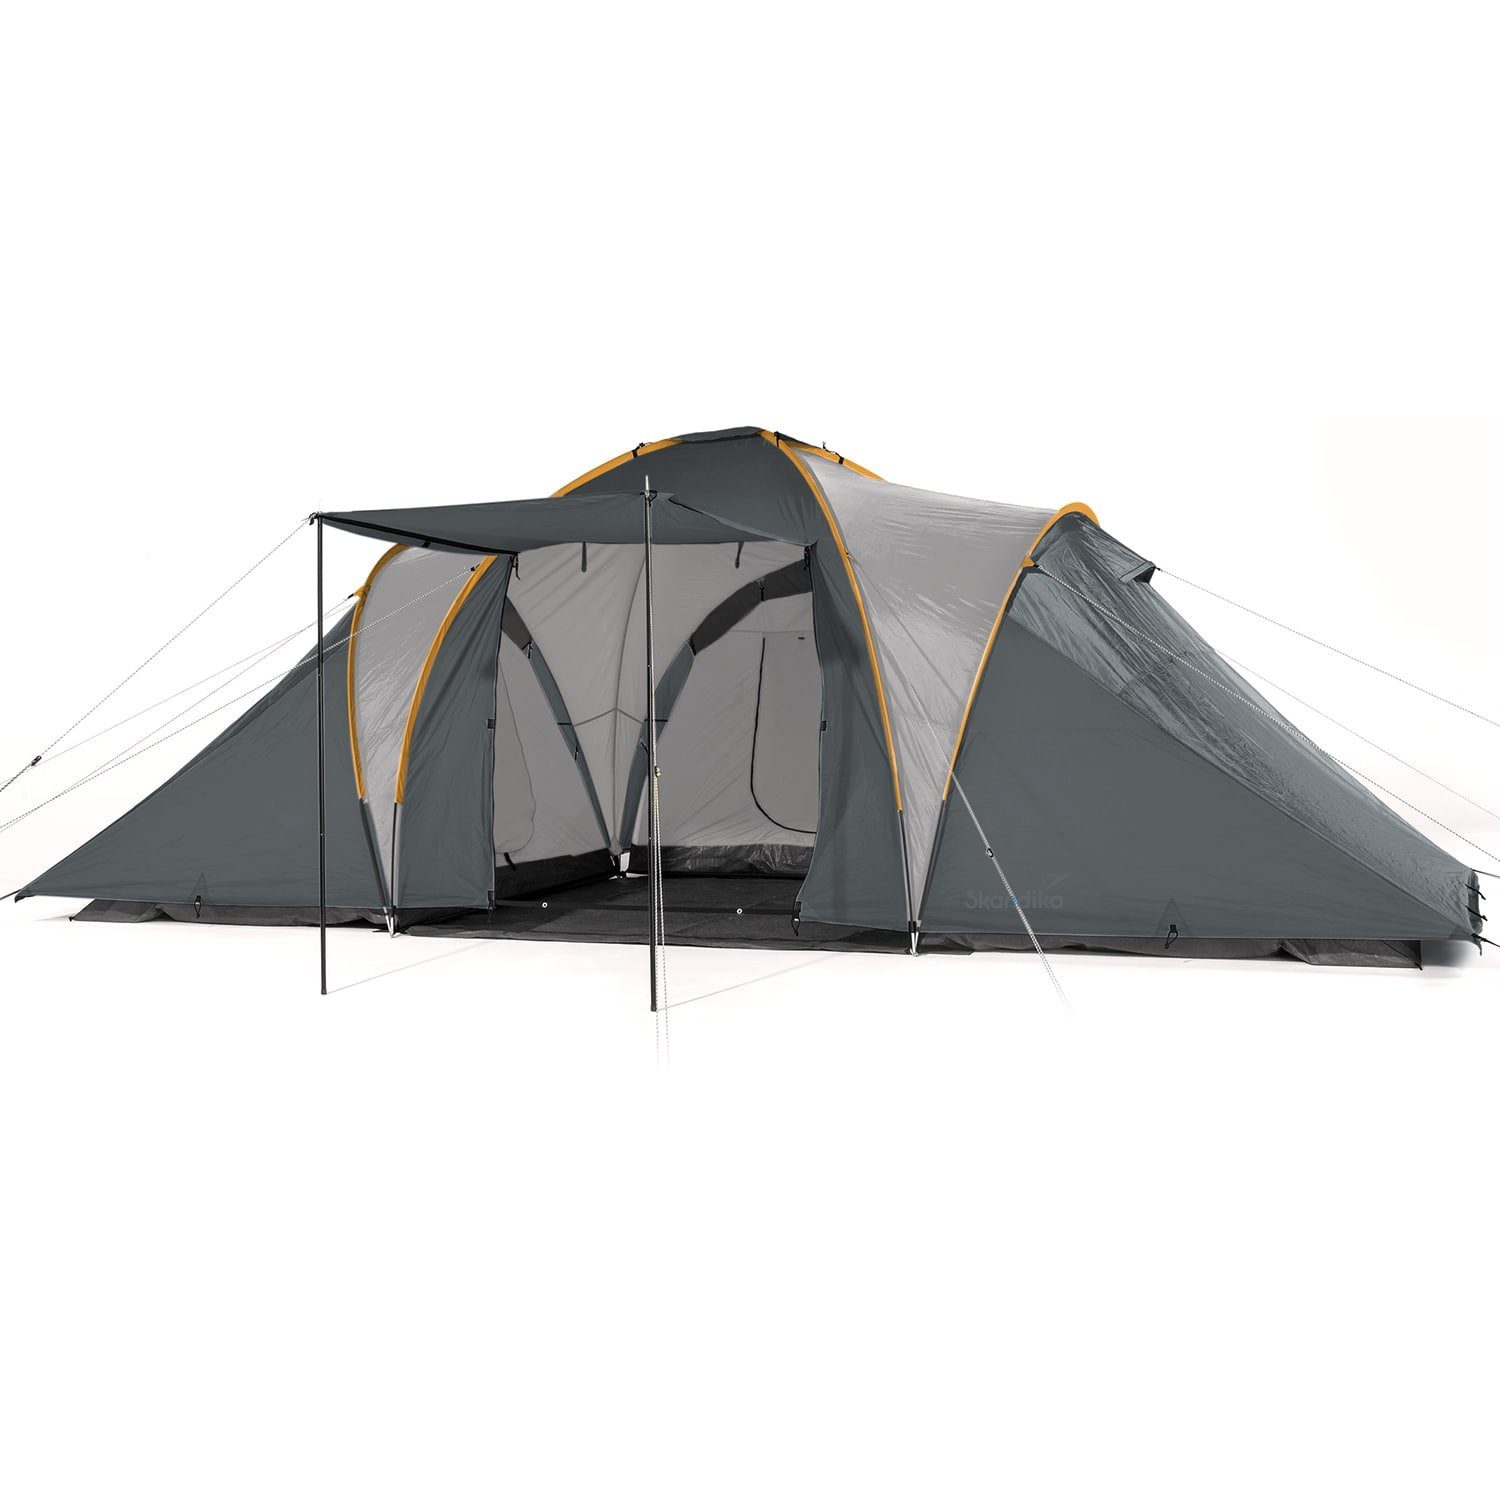 Skandika Kuppelzelt Daytona 6 Zelt, Personen: 6, dunkle Schlafkabinen mit eingenähtem Zeltboden